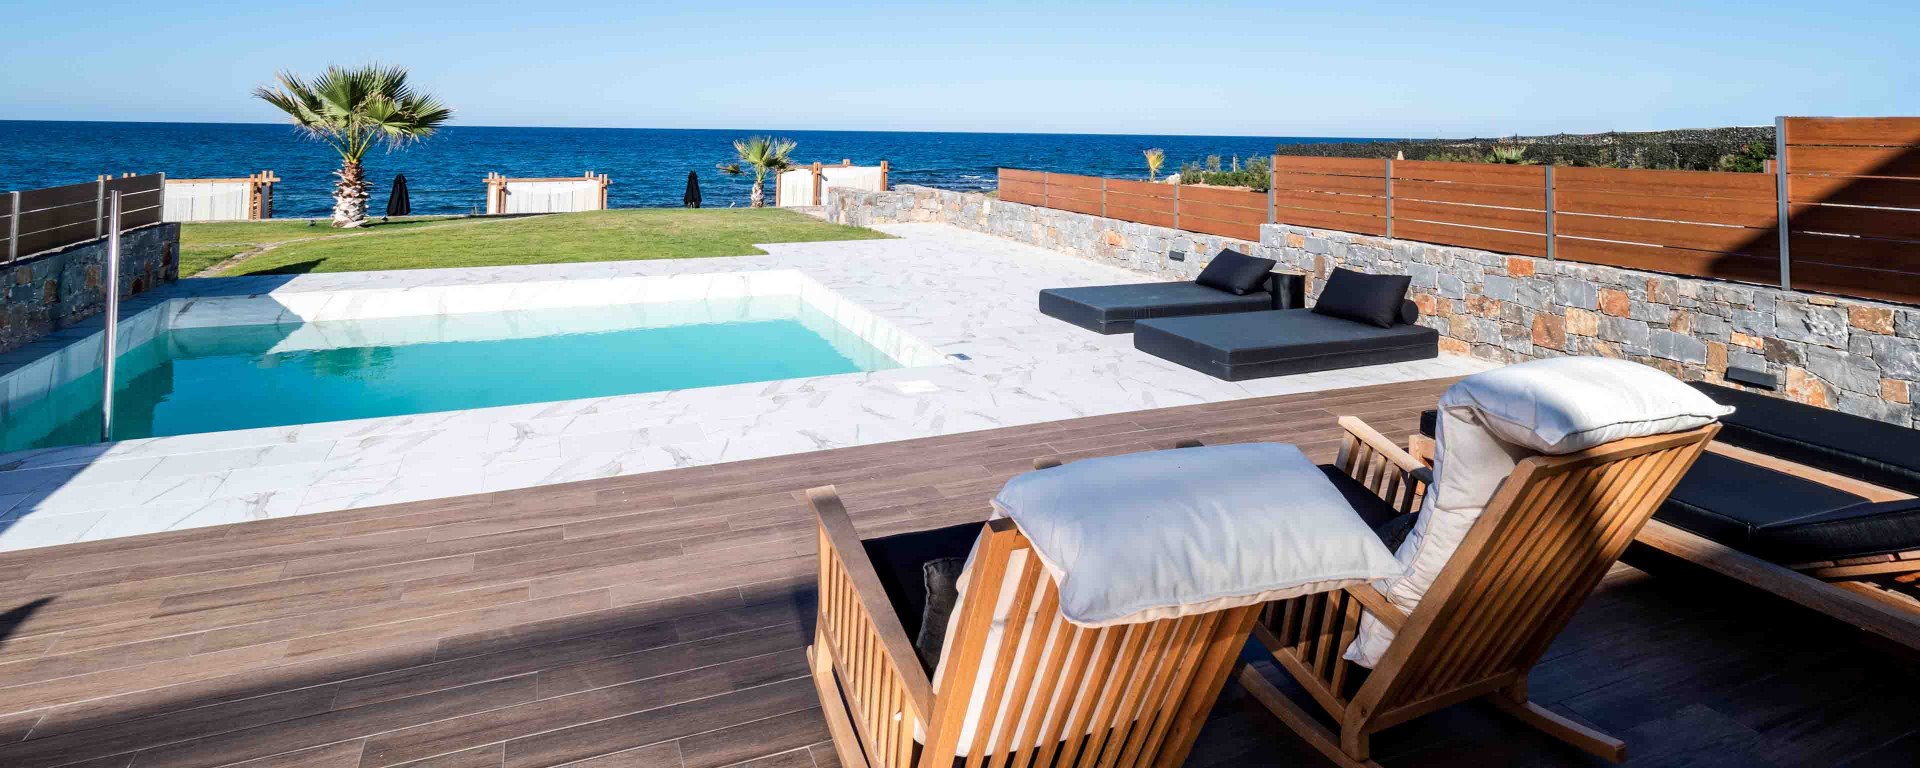 Luxus Ferienhaus Kreta Mieten - Abaton Dream Villa Beachfront